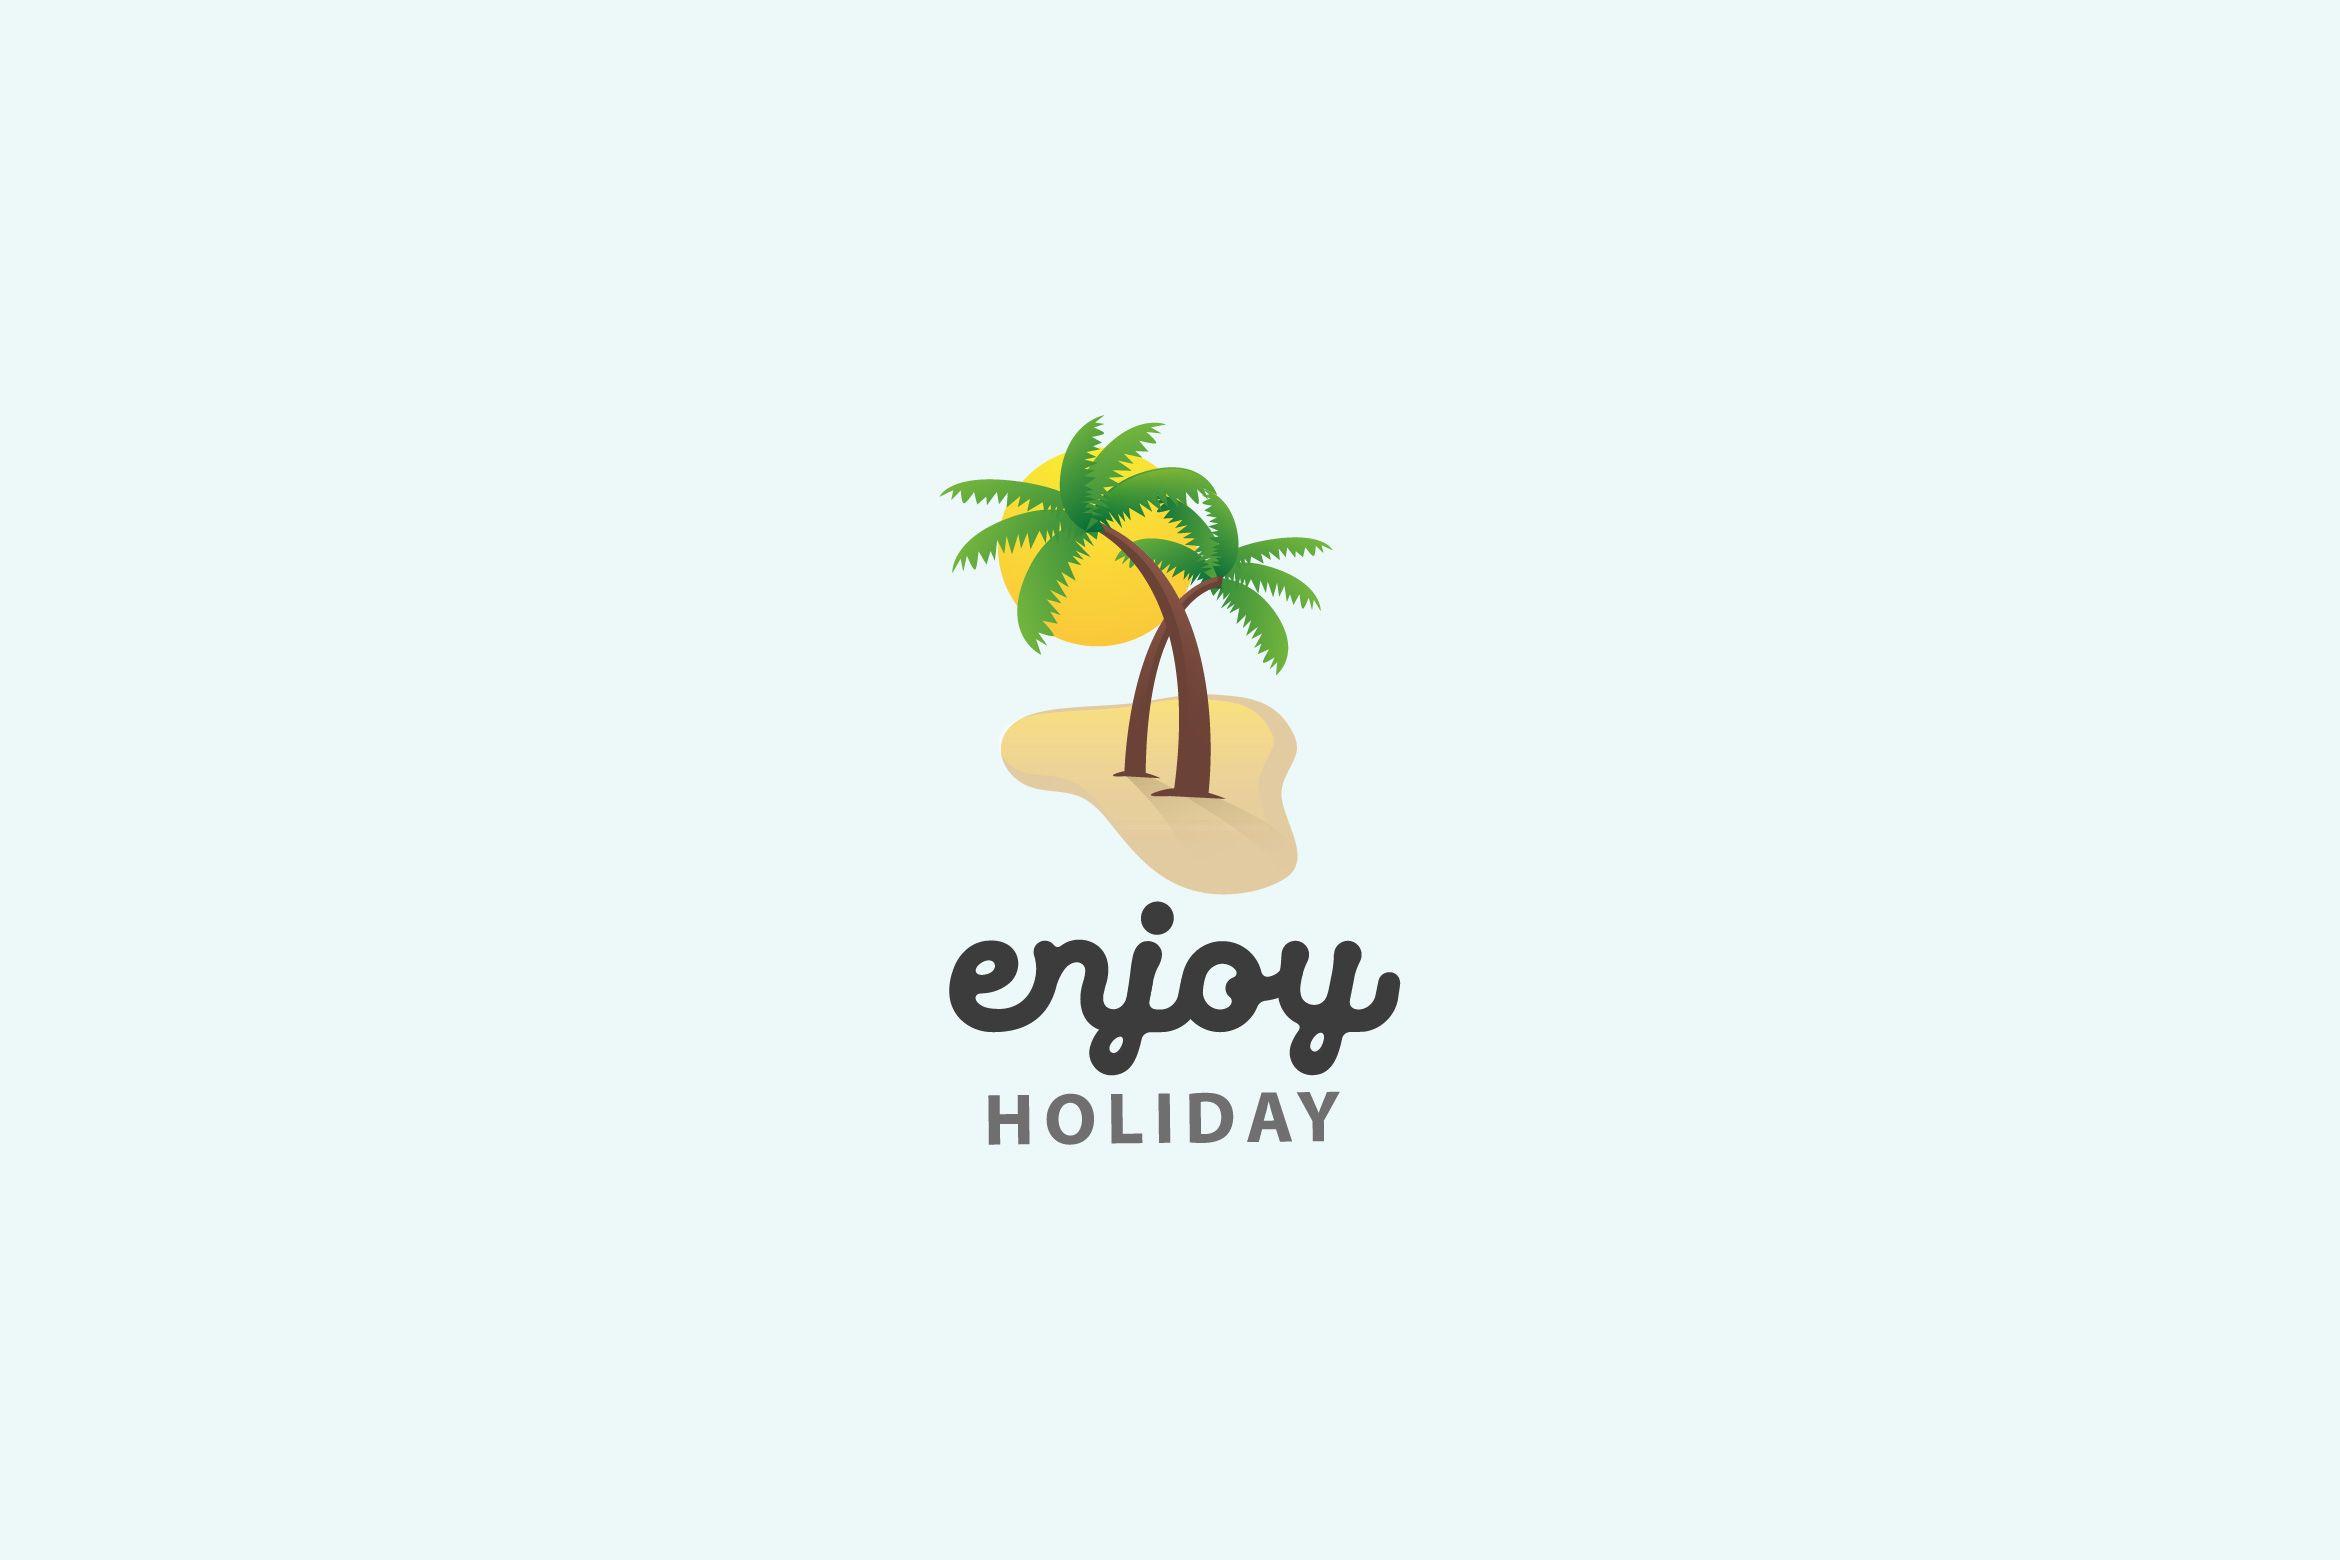 Holiday Logo - Enjoy Holiday